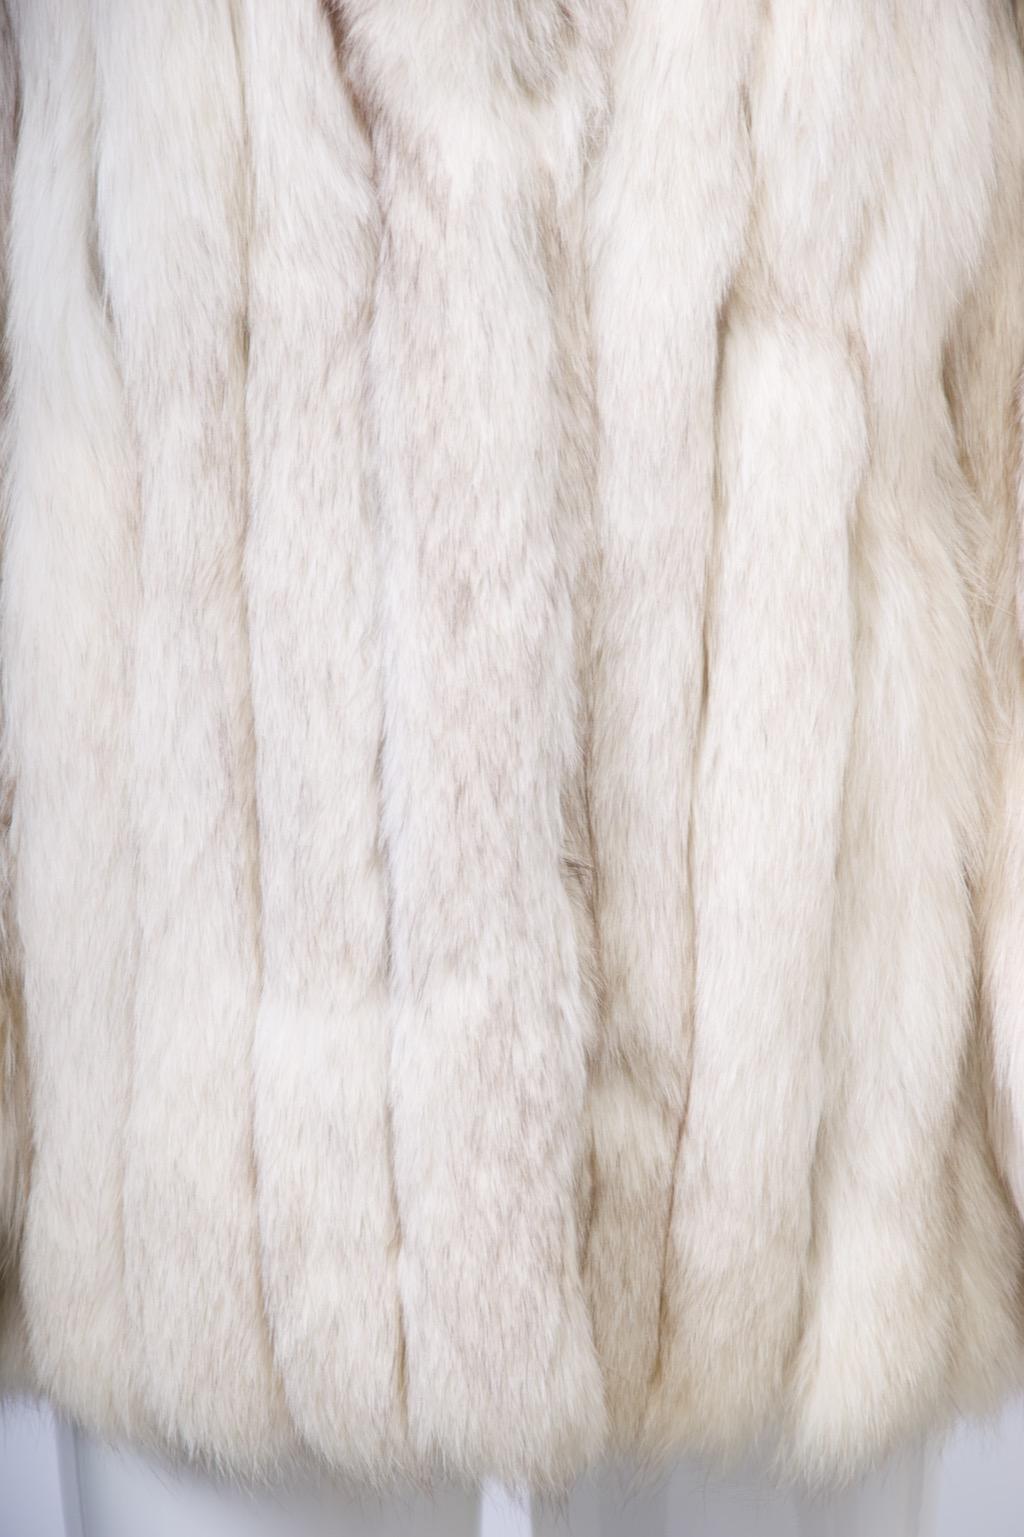 saga fox fur coat value